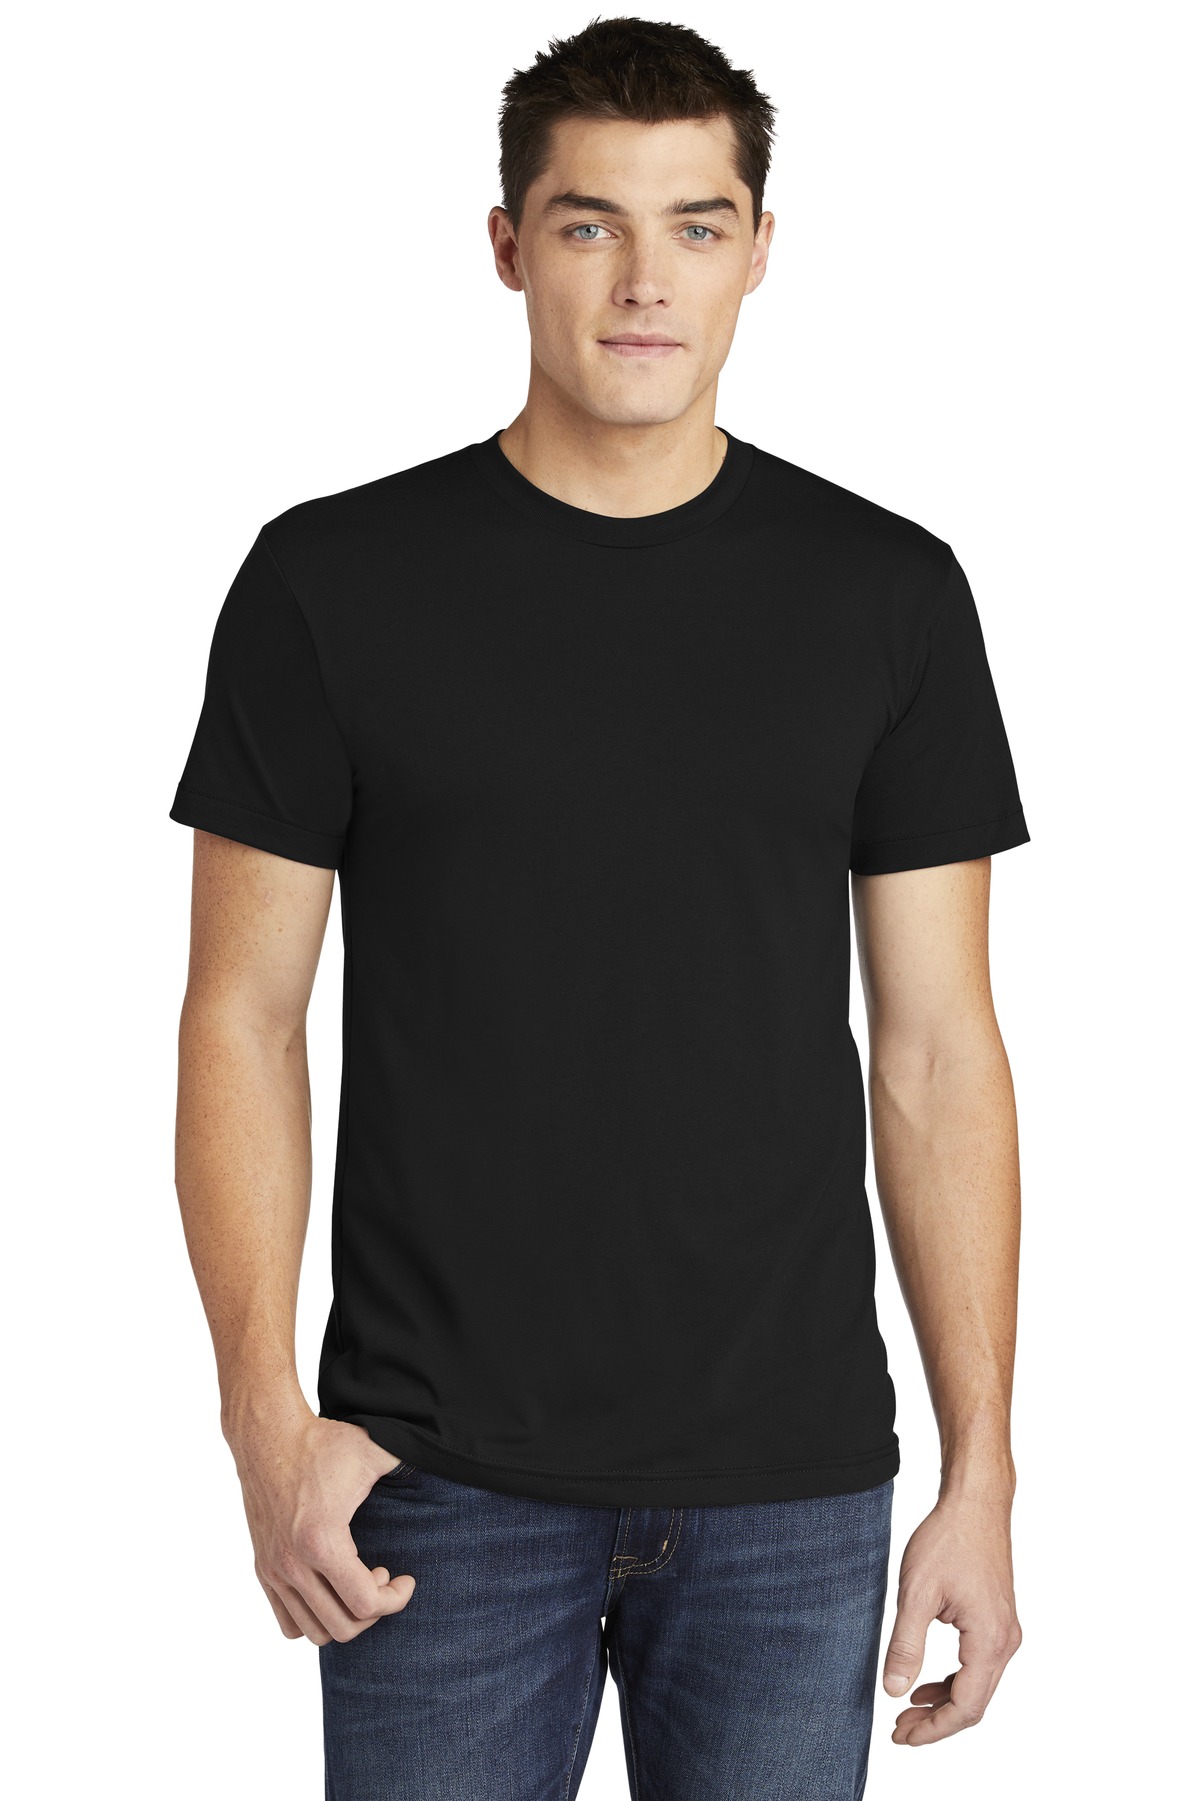 American Apparel Men's T-Shirt - Black - XL